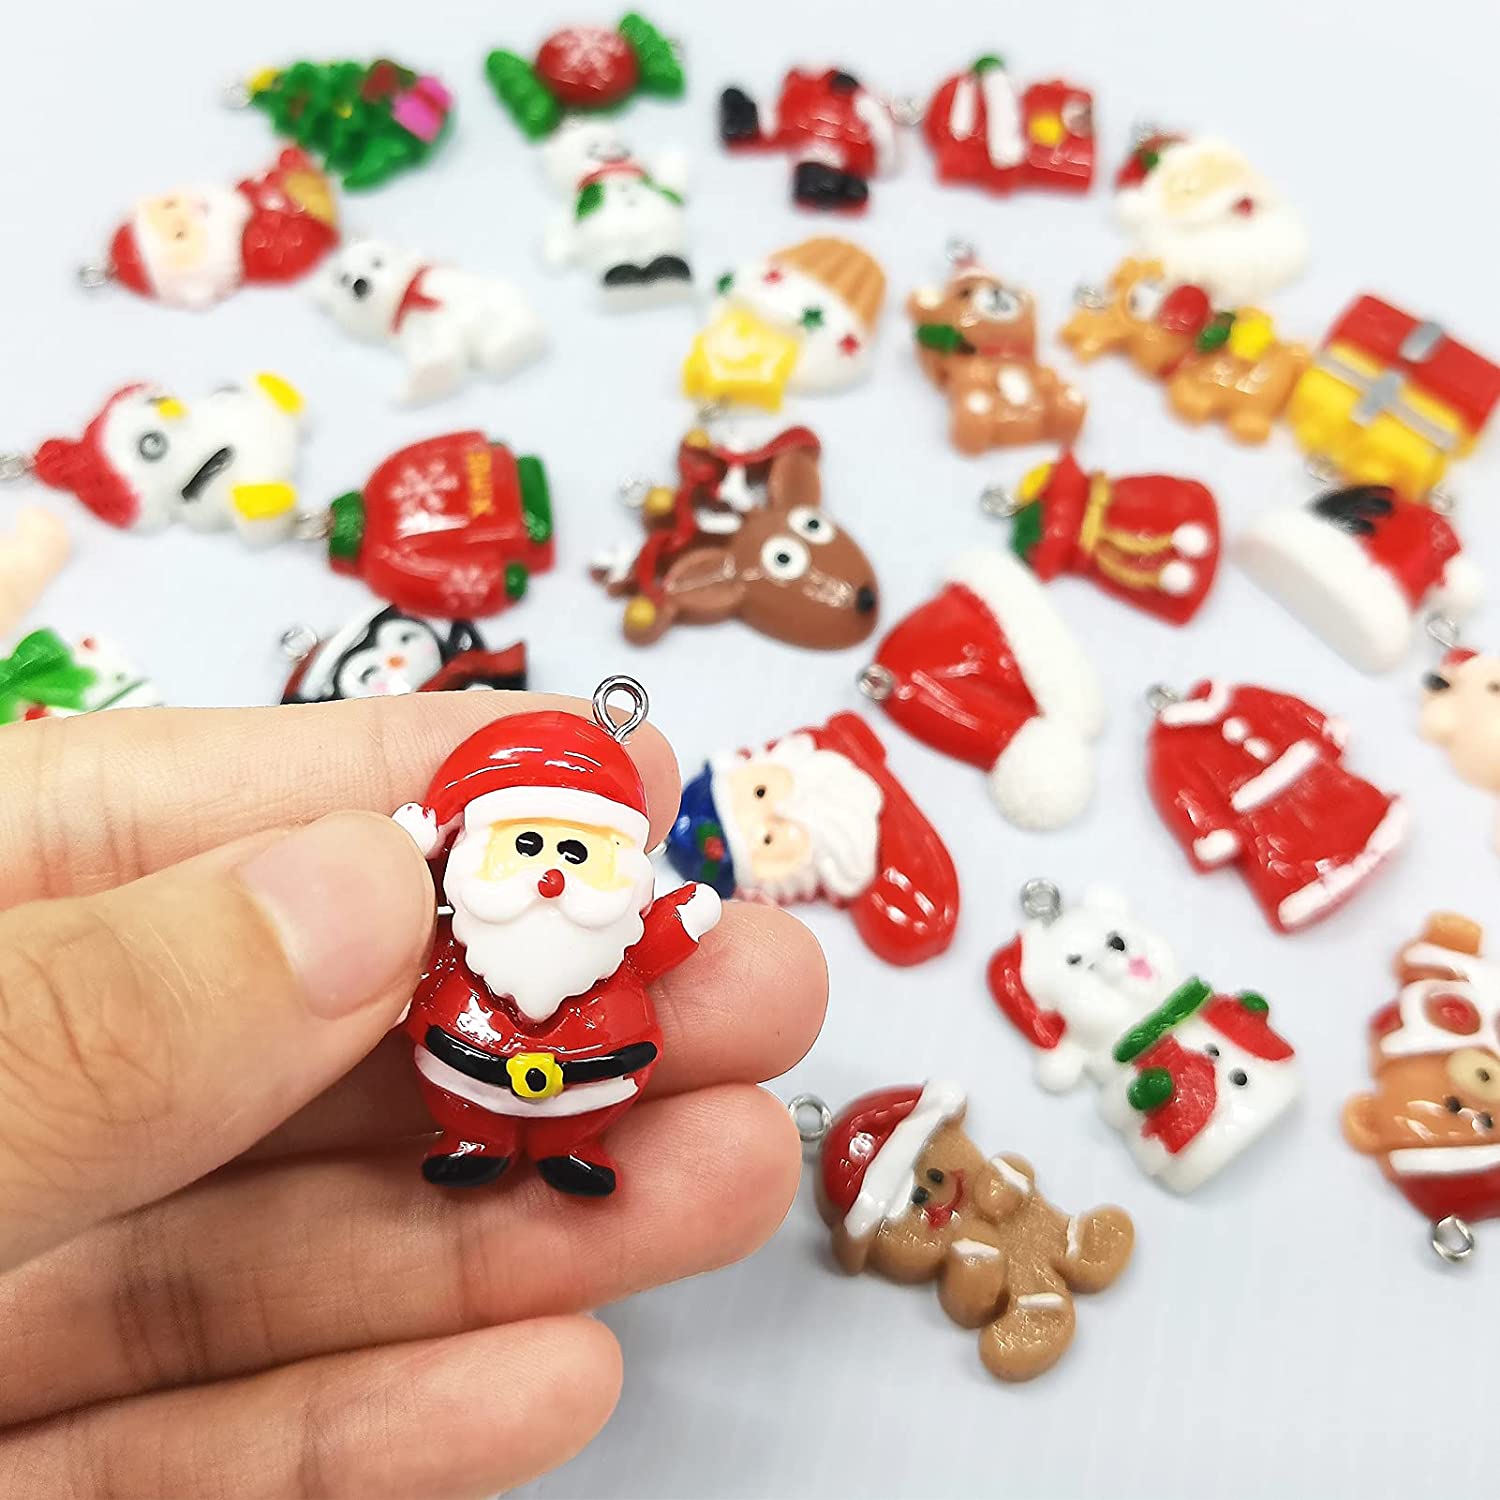 GuassLee 28pcs Mini Christmas Ornaments Set for Christmas Decorations Craft Supplies Tiny Santa Claus Snowman Ornaments - image 5 of 9